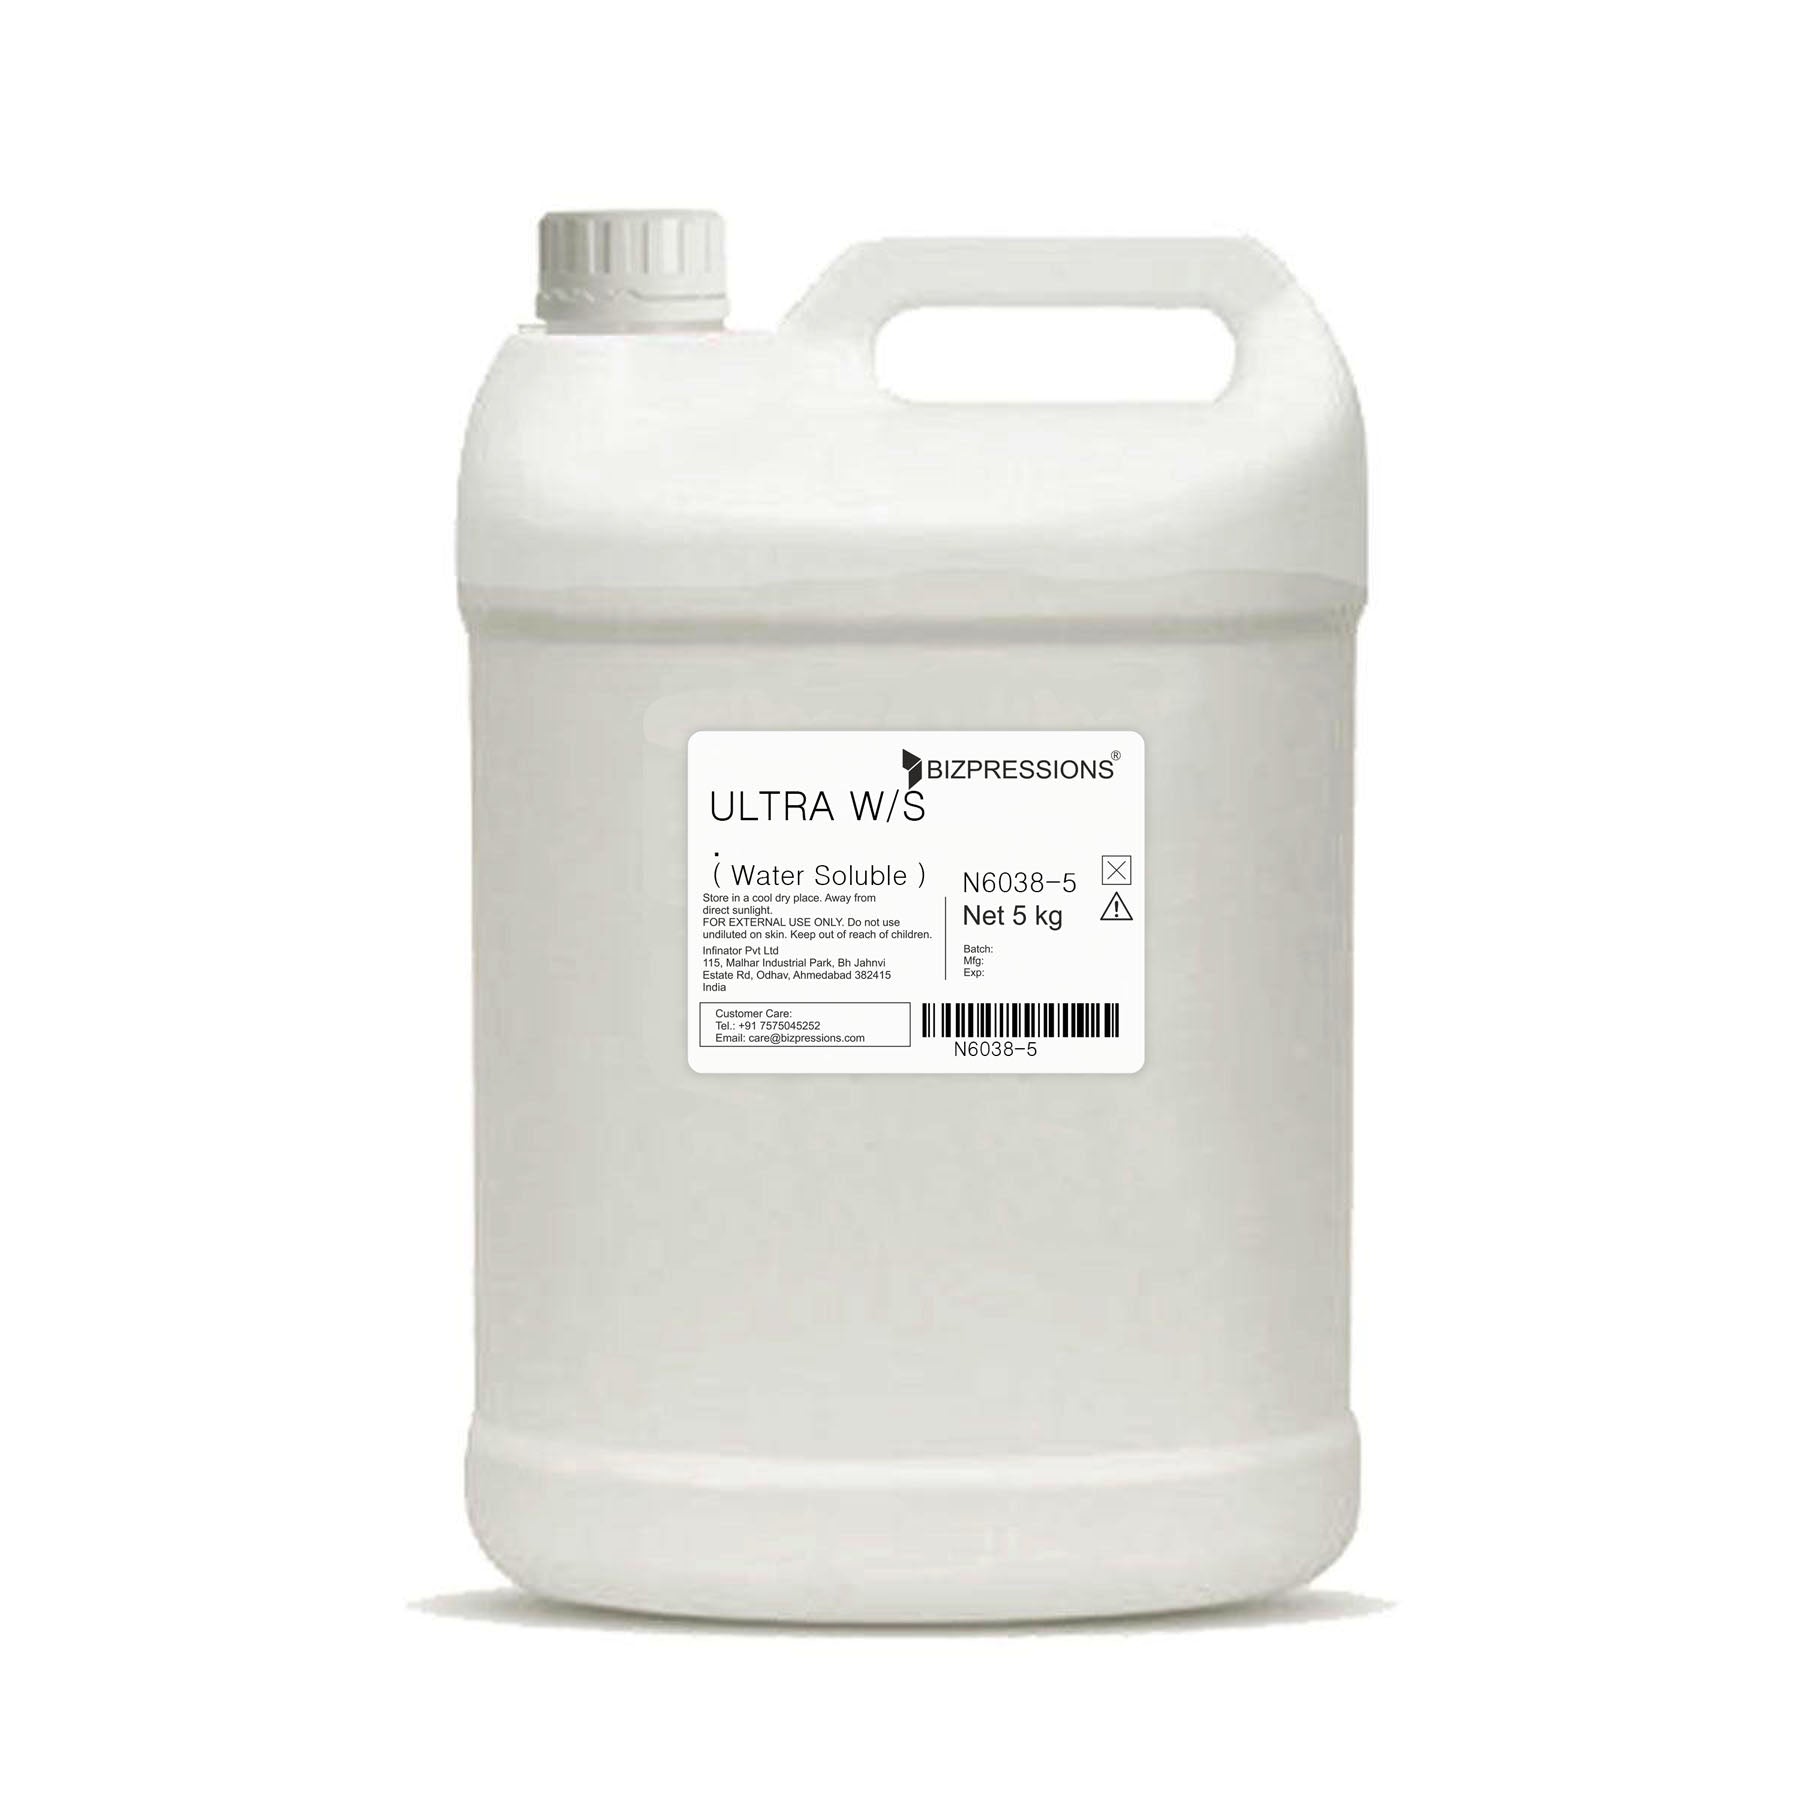 ULTRA W/S - Fragrance ( Water Soluble ) - 5 kg